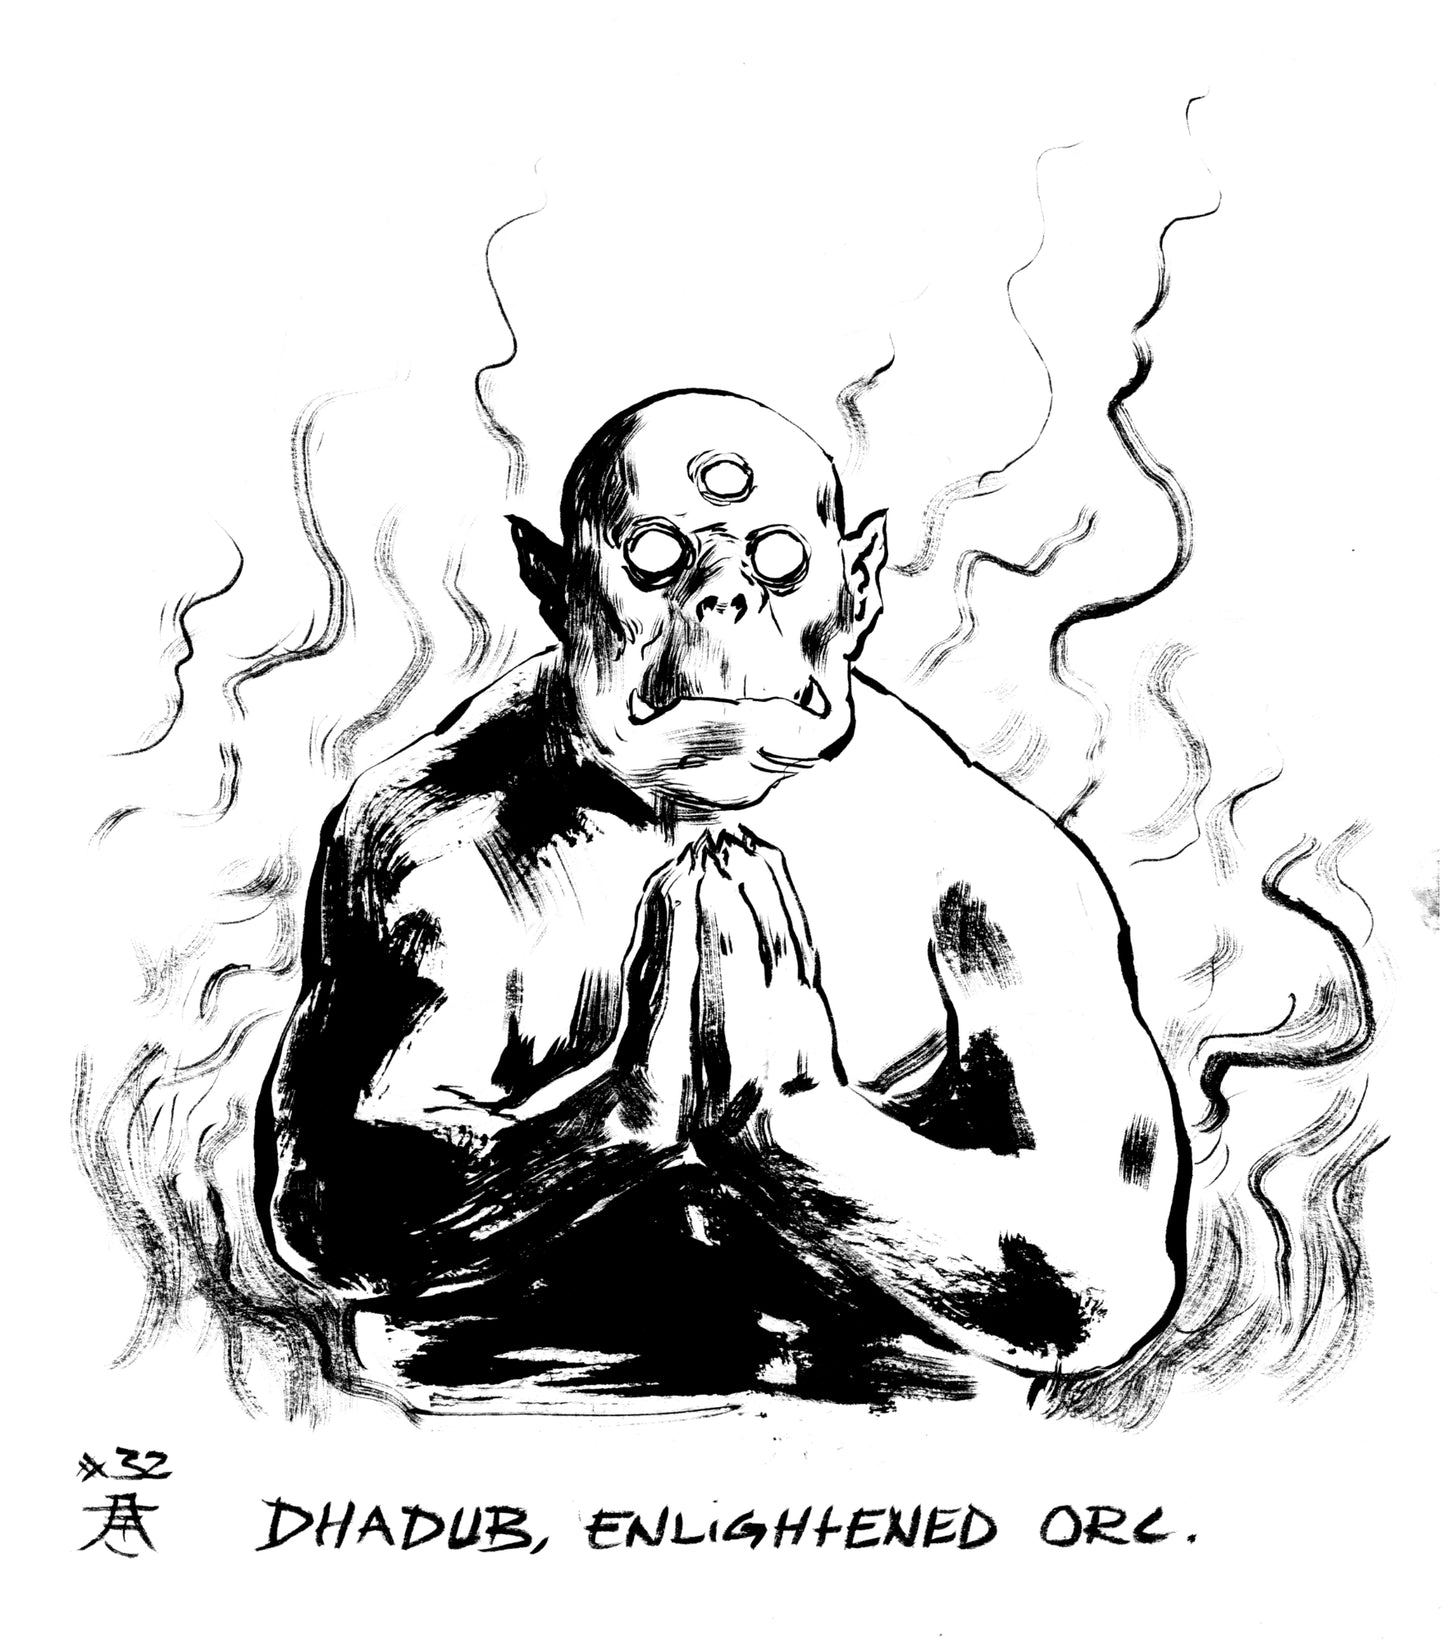 # 32 - Dhadub, Enlightened Orc